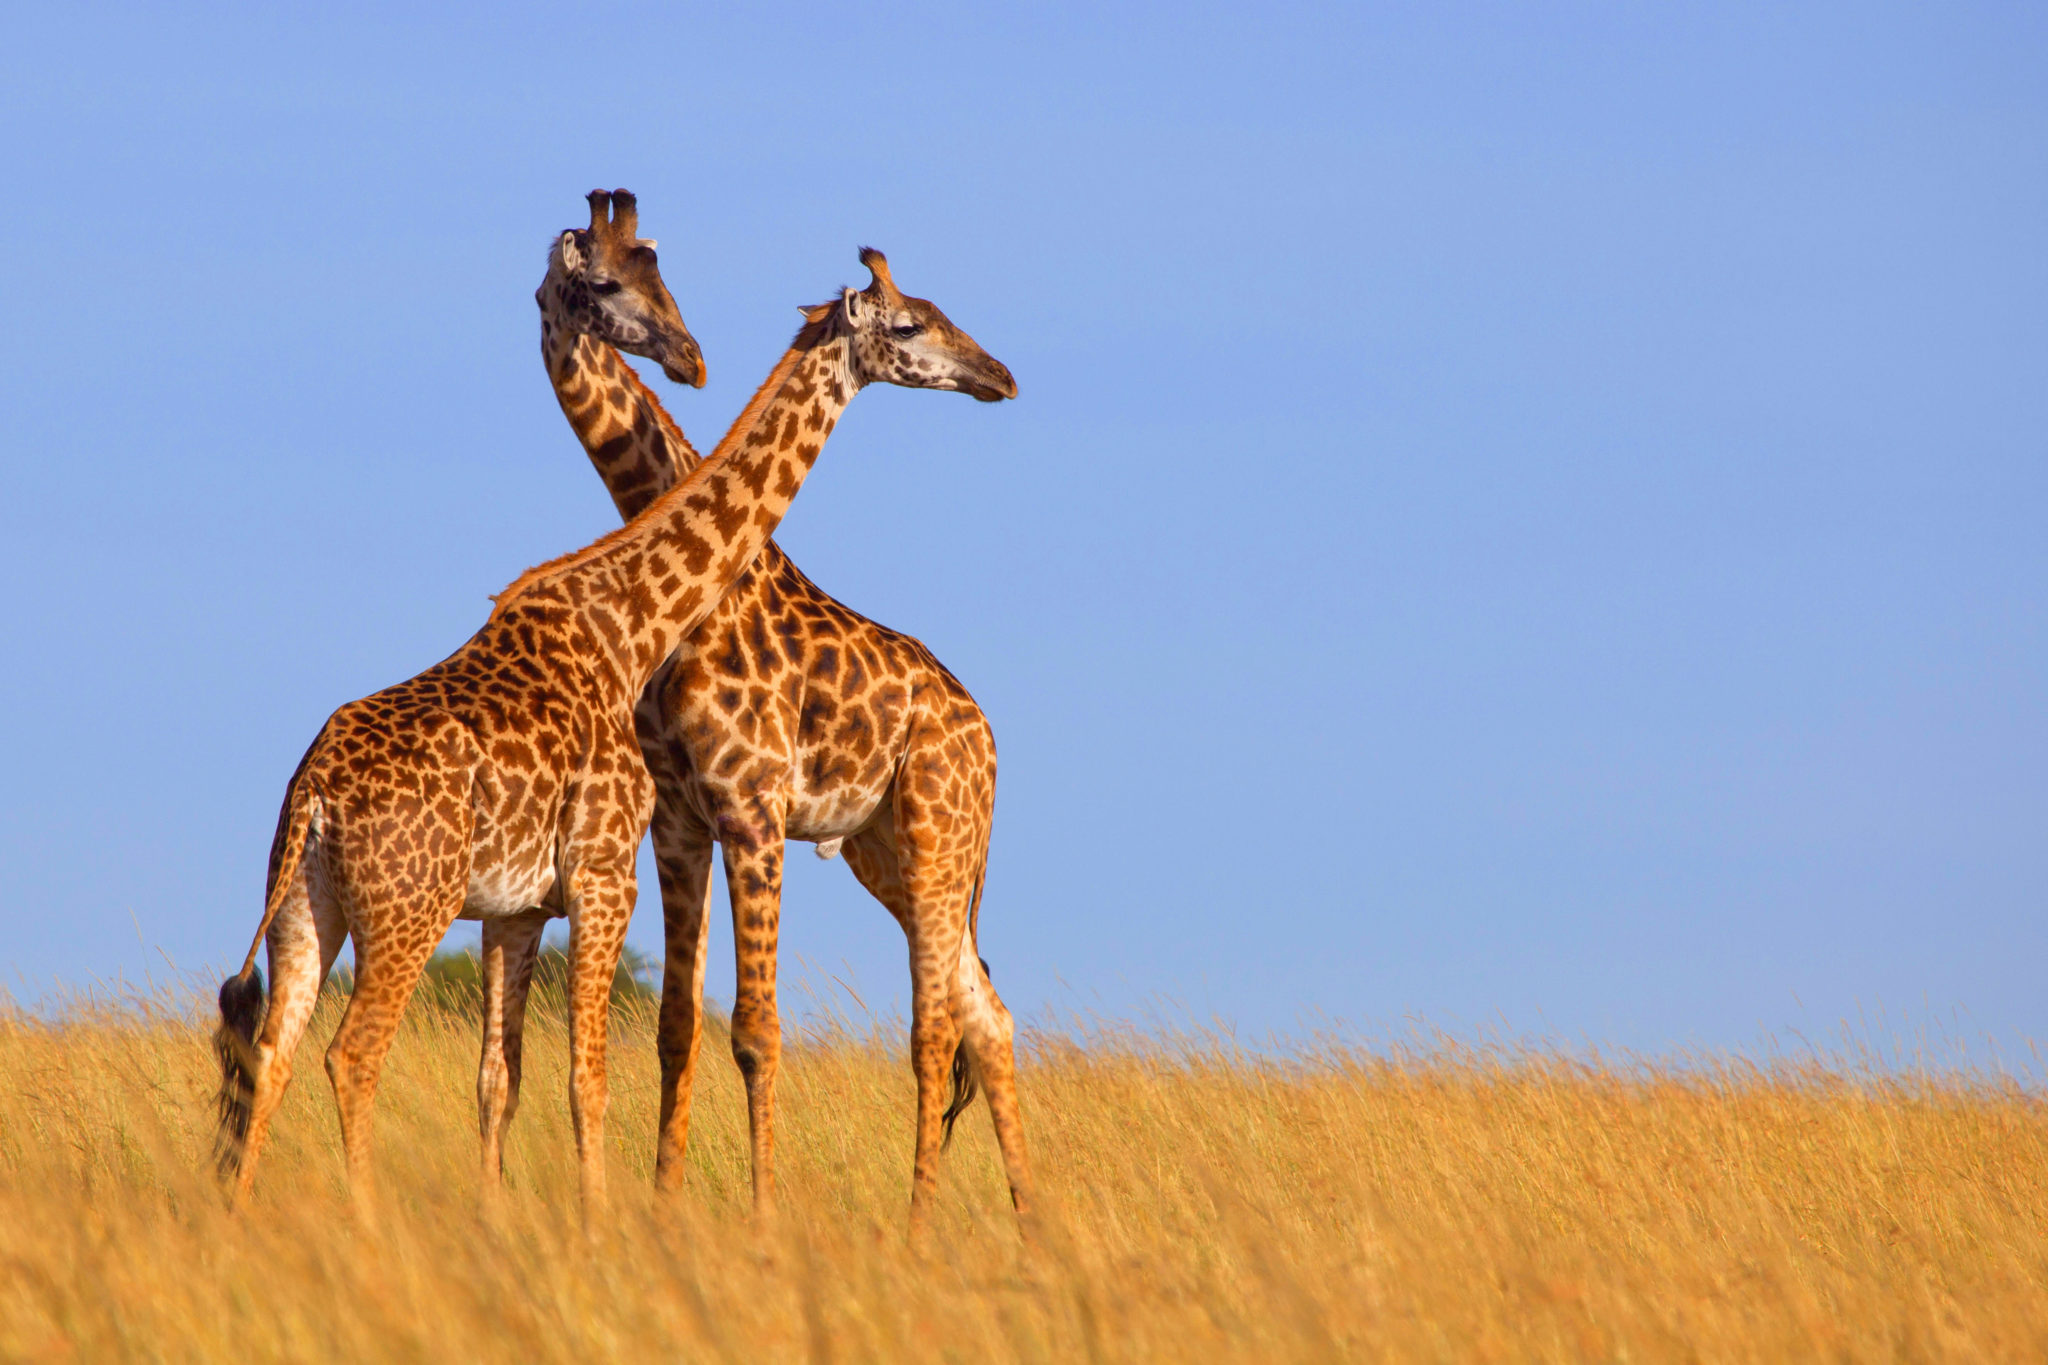 Two Masai Giraffes in savannah, Kenya